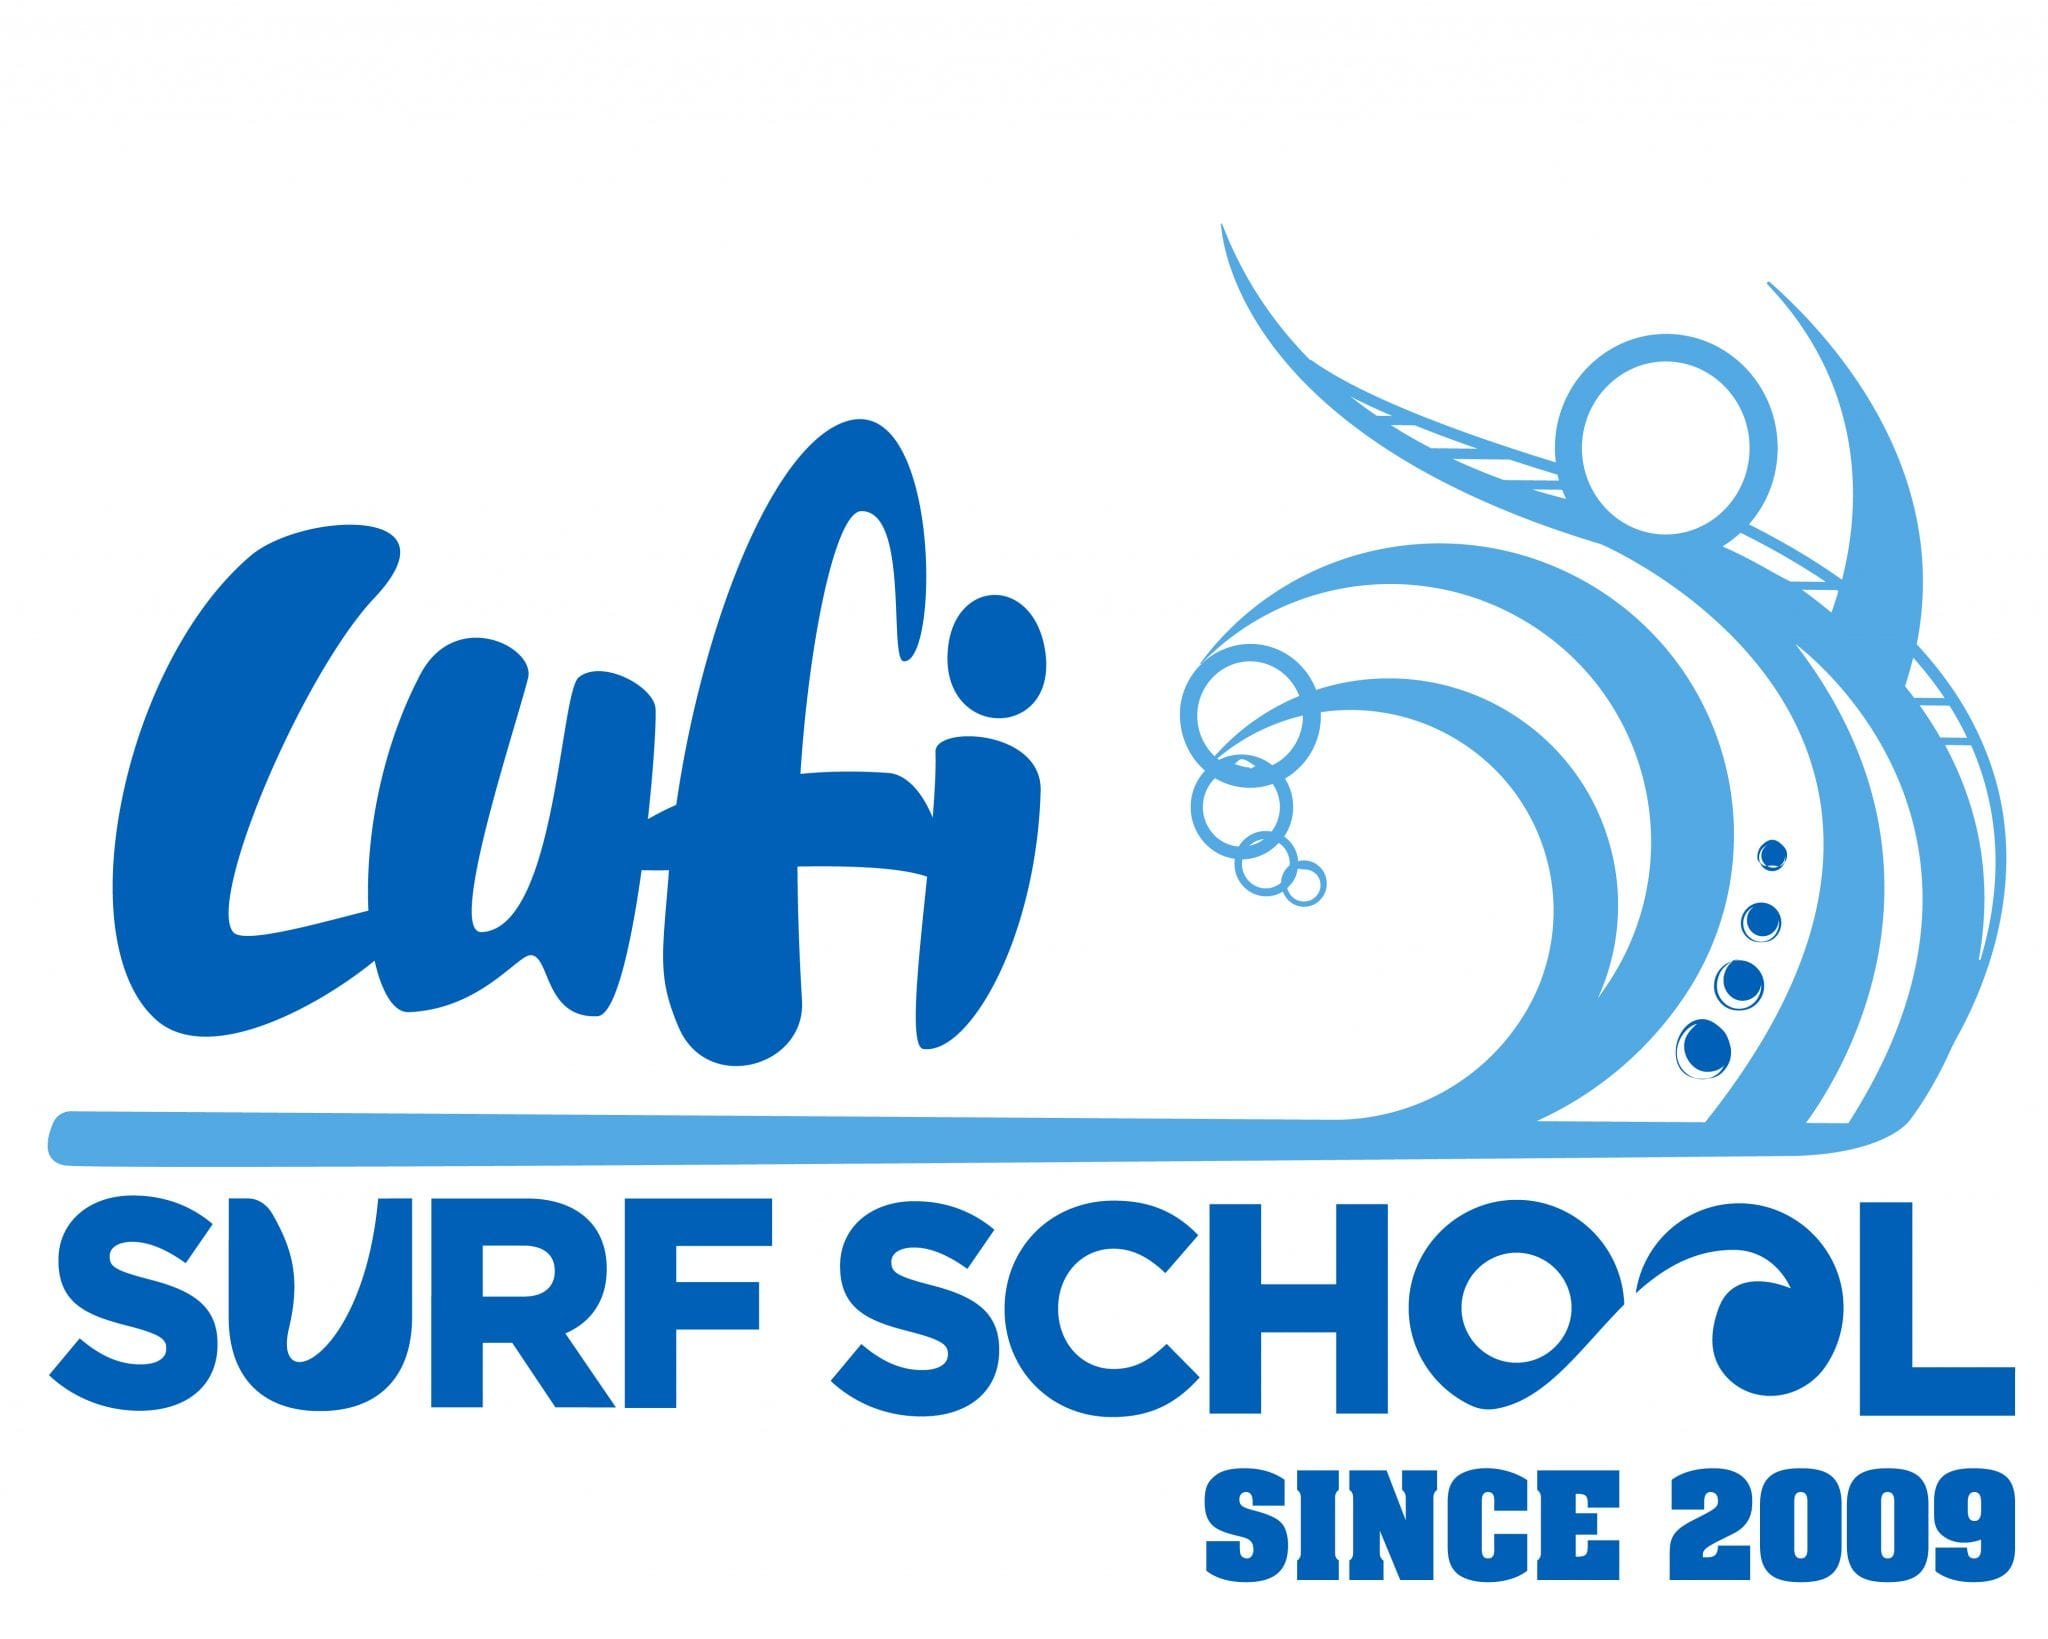 Lufi Surf School